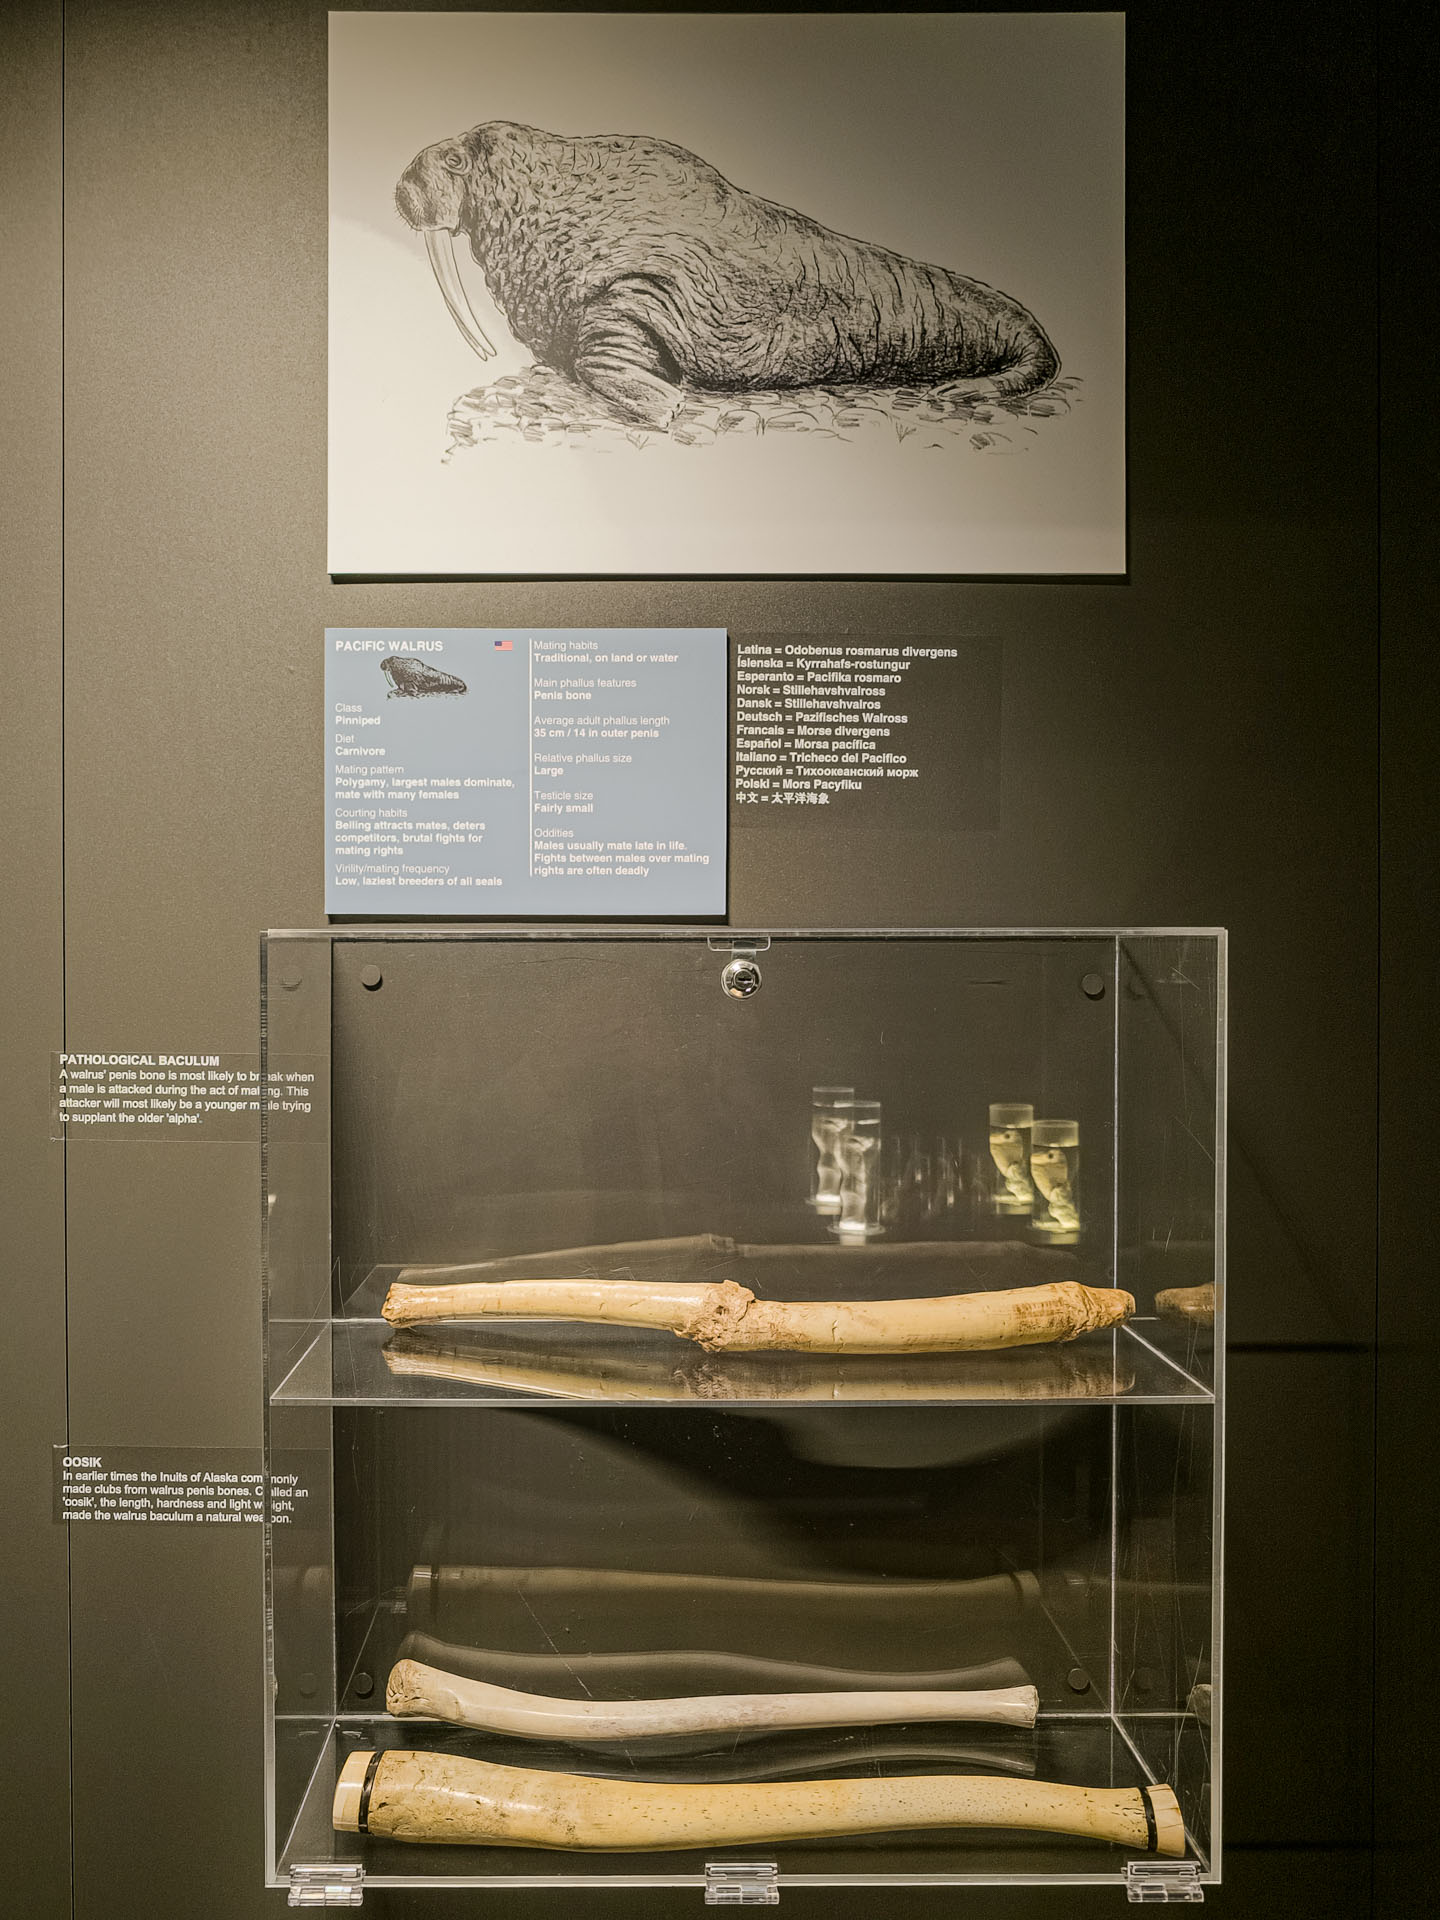 Walrus penis at the Icelandic Phallological Museum in Reykjavik